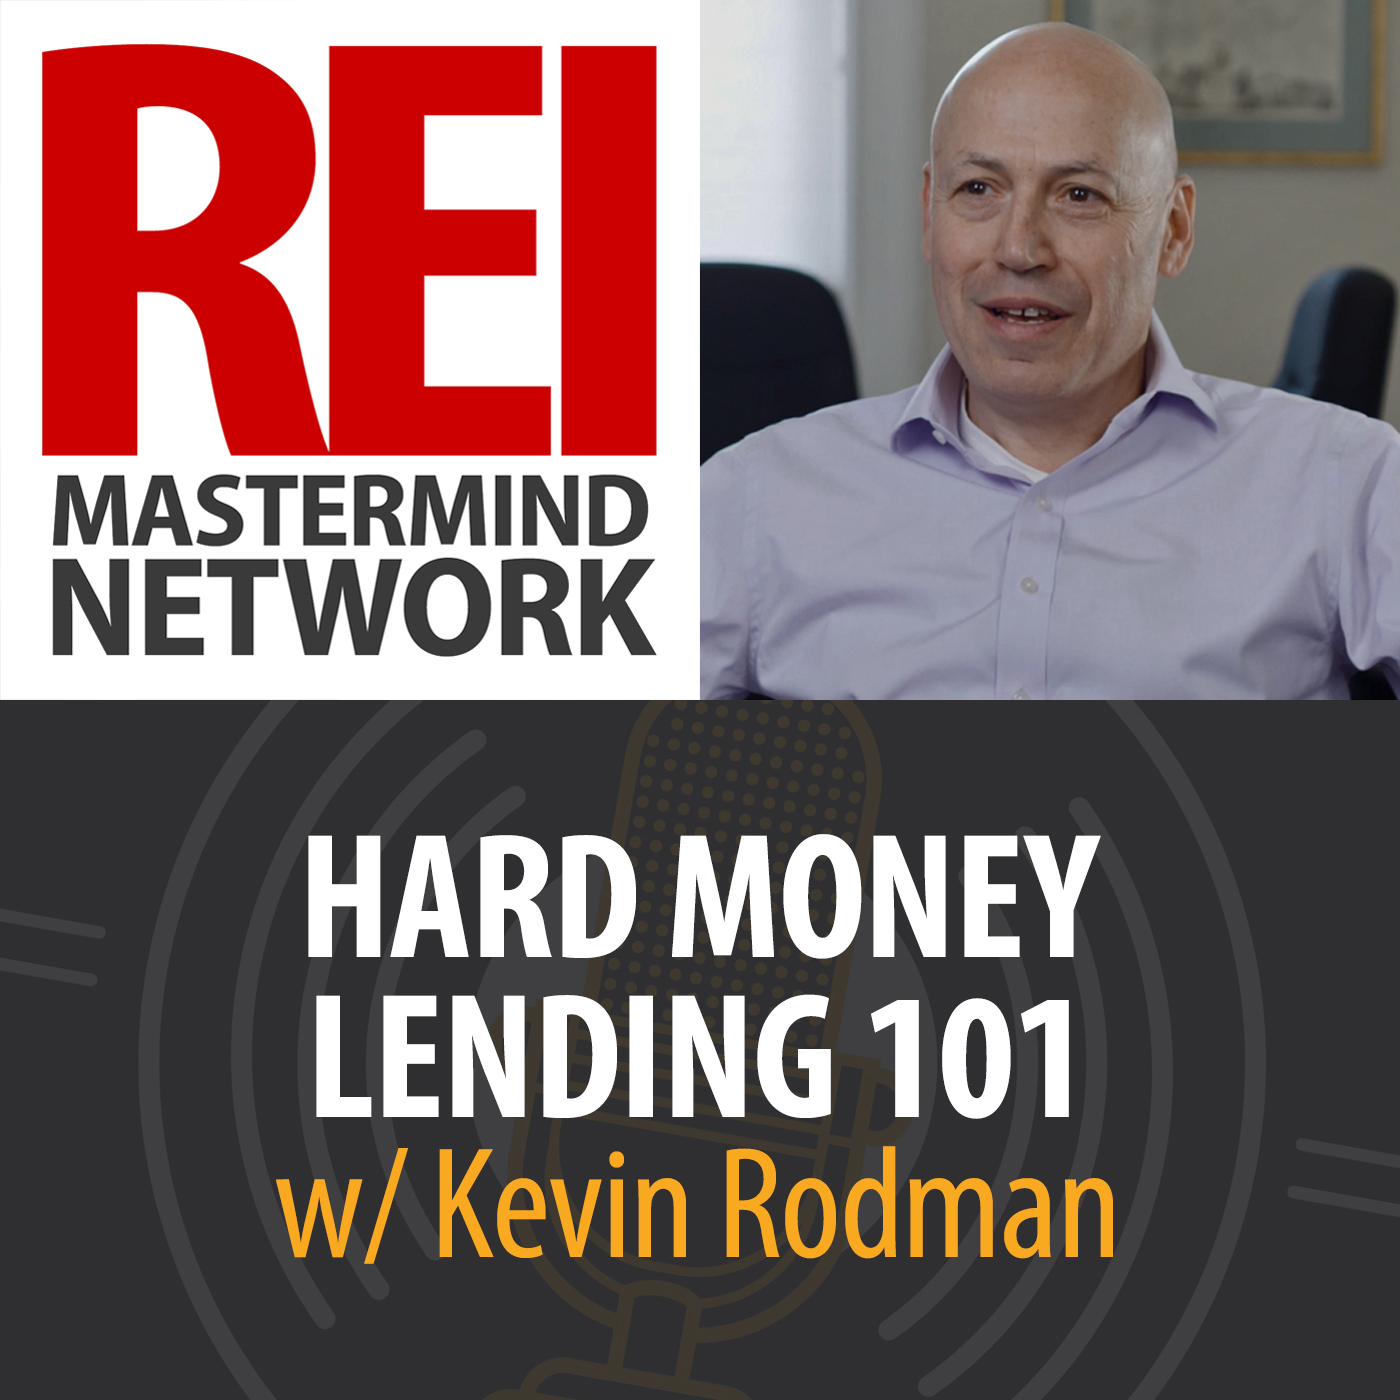 Hard Money Lending 101 with Kevin Rodman #237